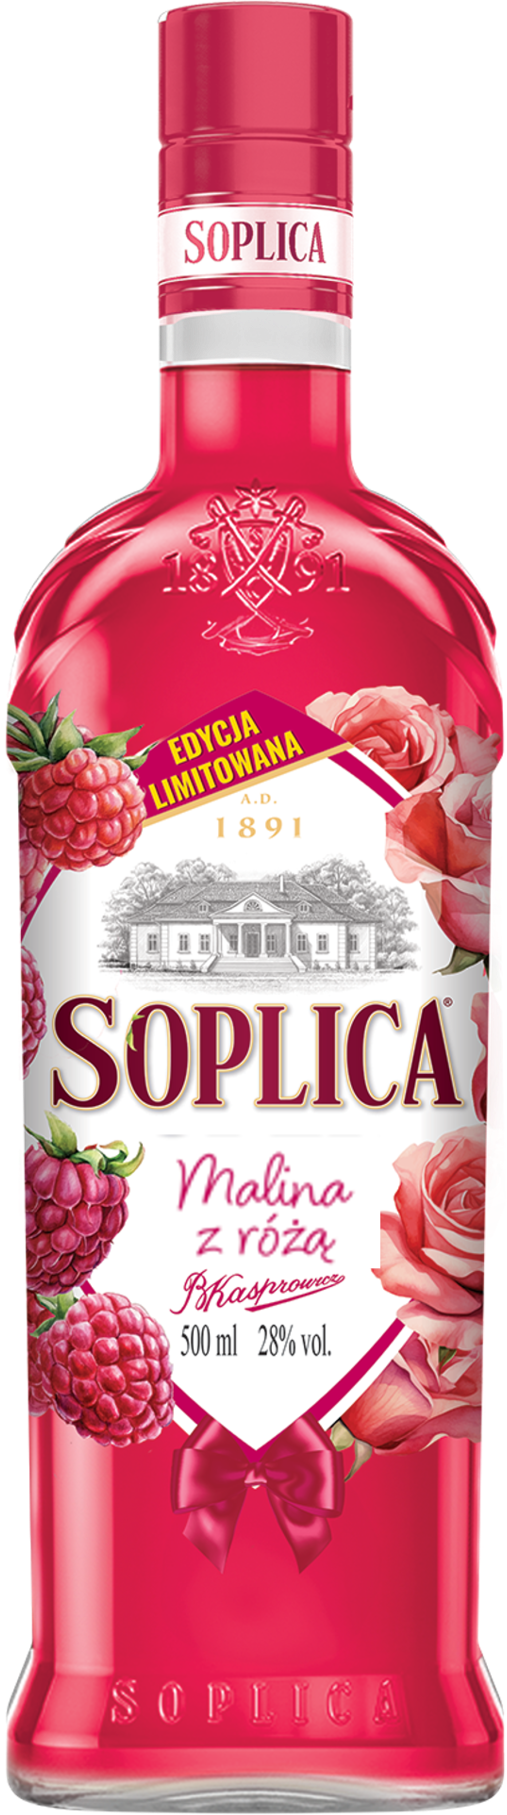 Soplica Raspberry & Rose (limited edition) 0.5l